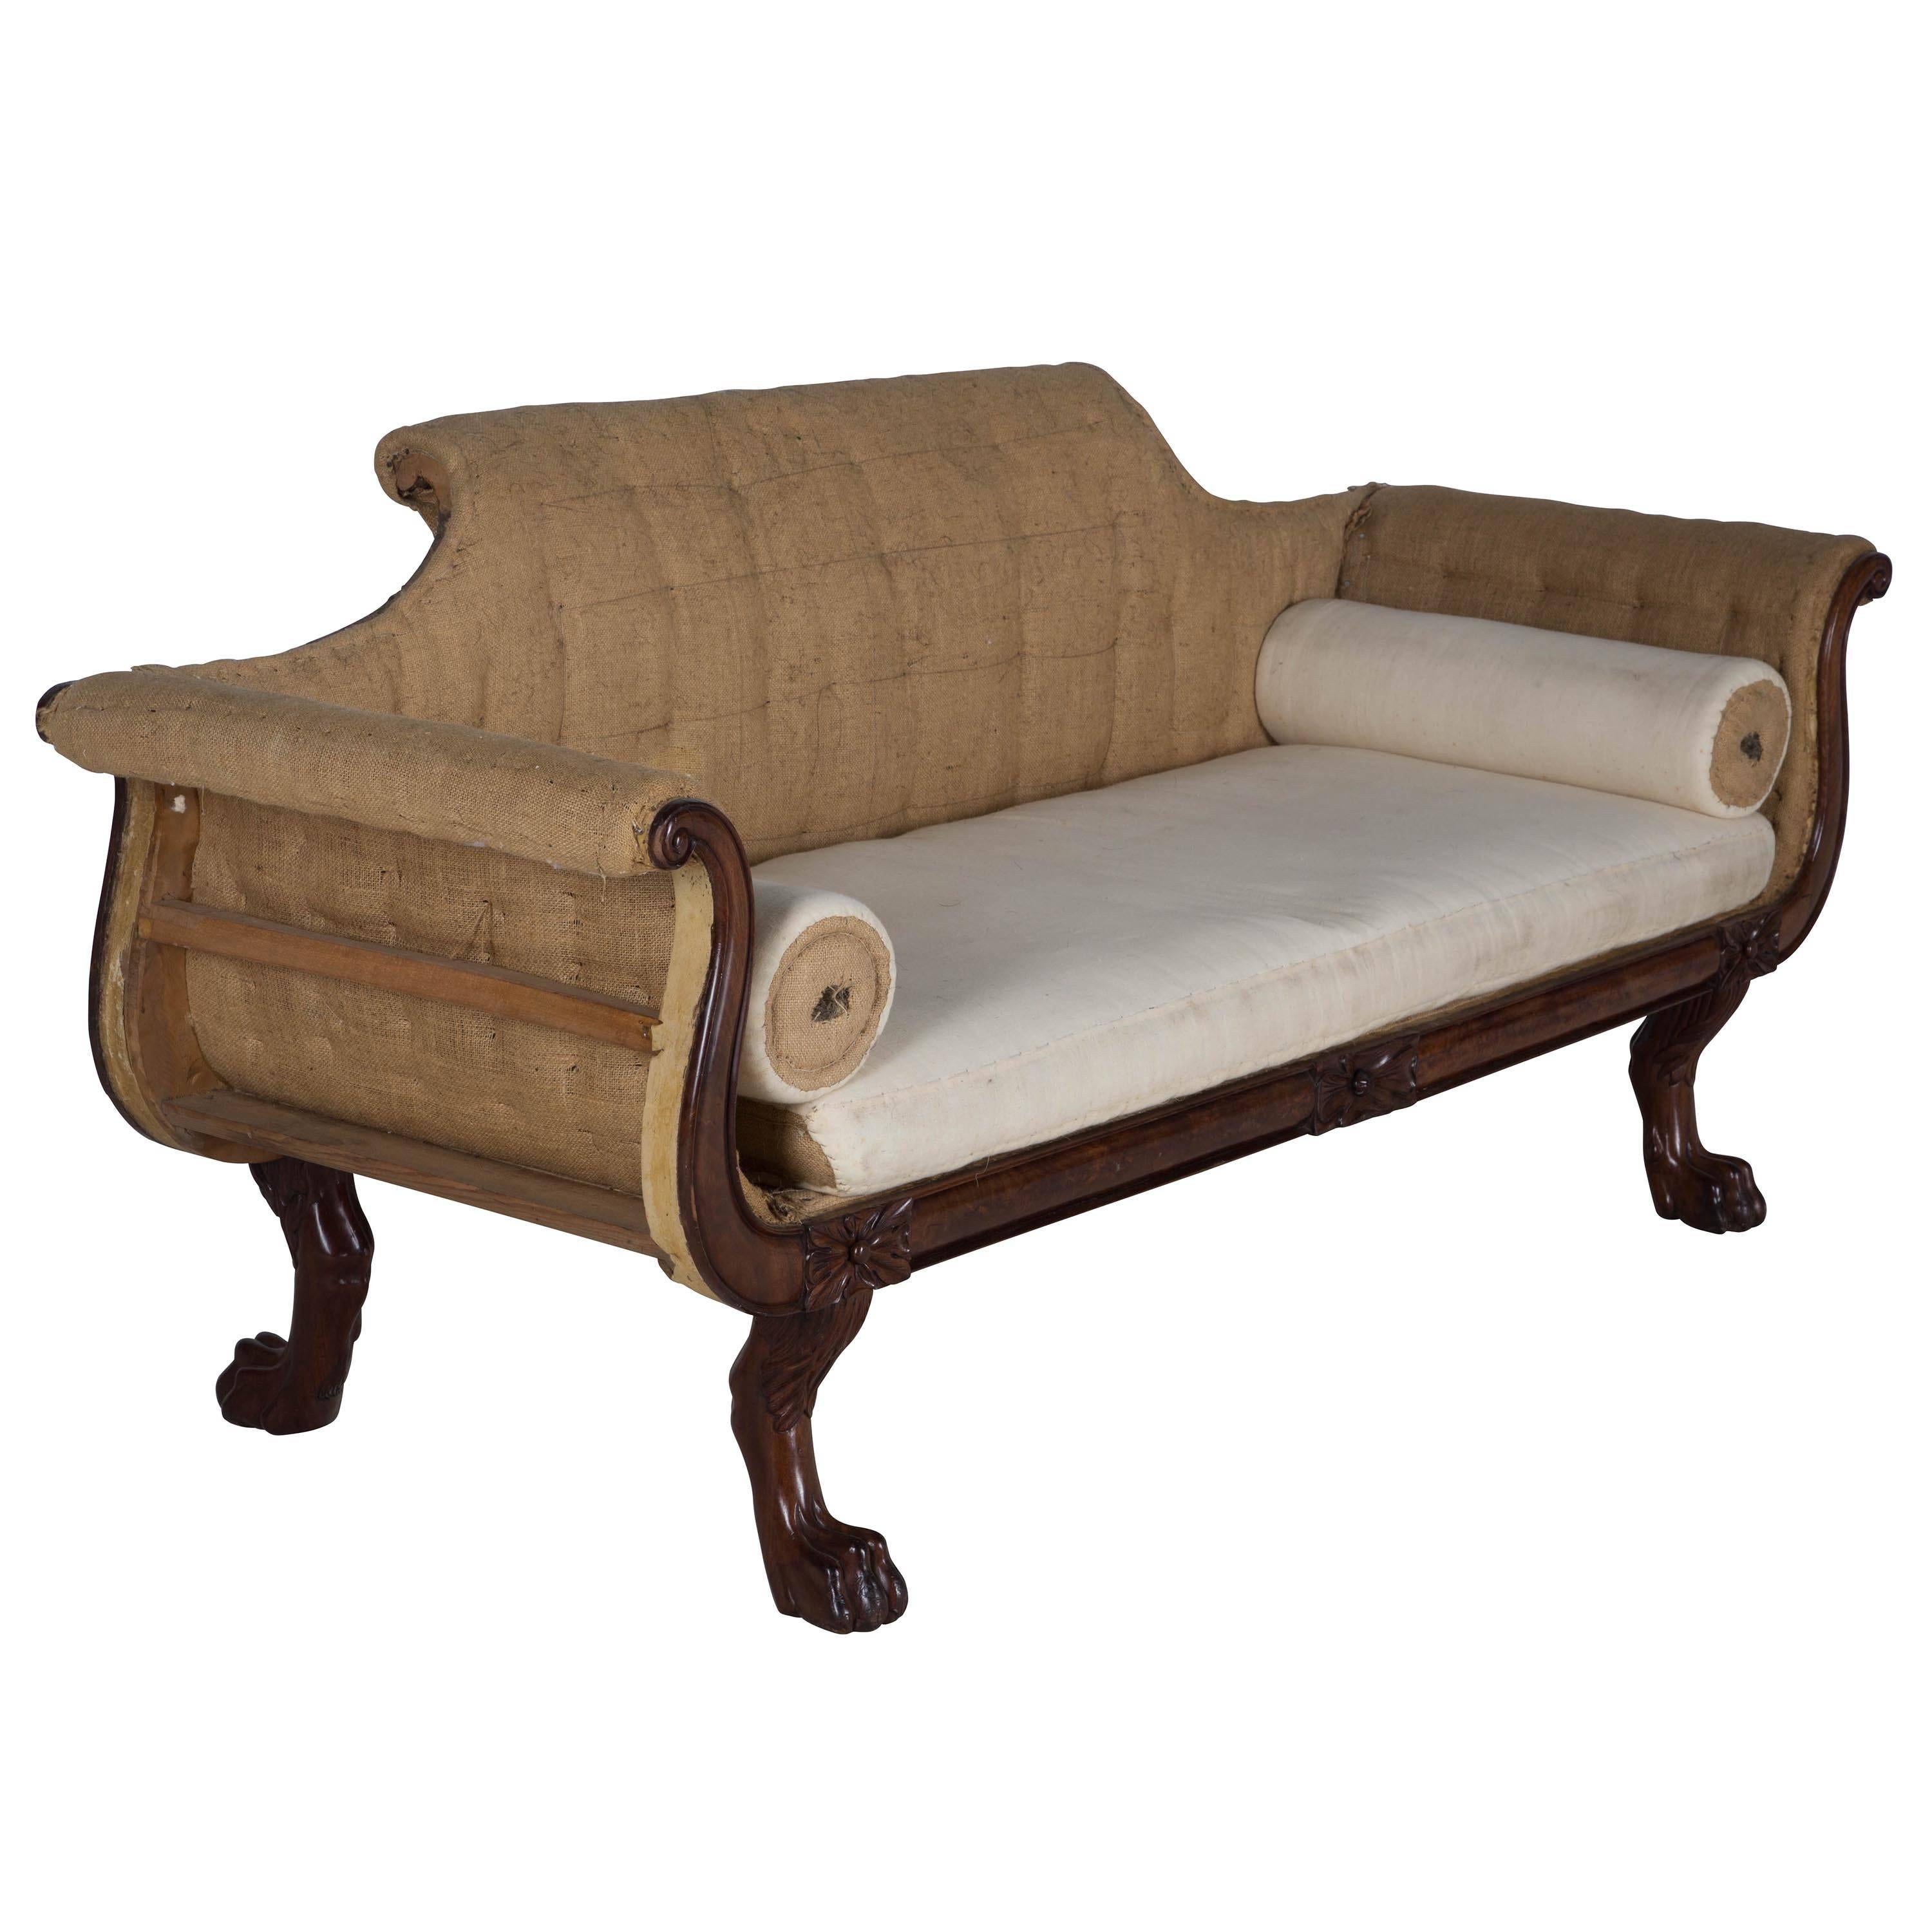 Regency mahogany sofa on four carved claw feet, circa 1820, Irish.